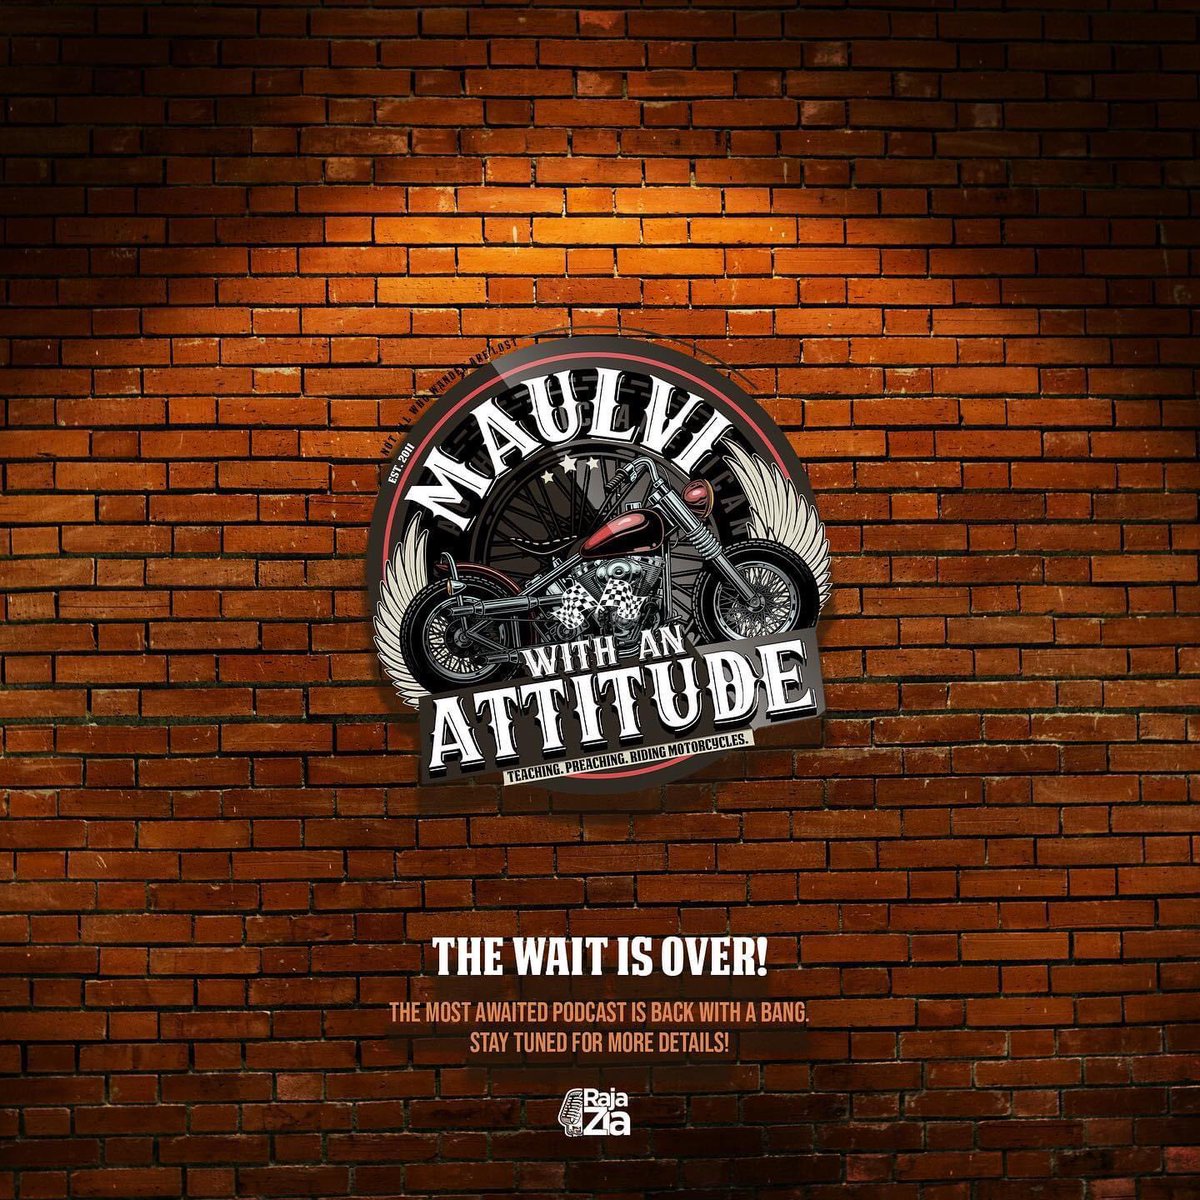 It’s finally here! 😎 OMG!!!
Stay tuned guys…
#NewPodcast #MaulviWithAnAttitude